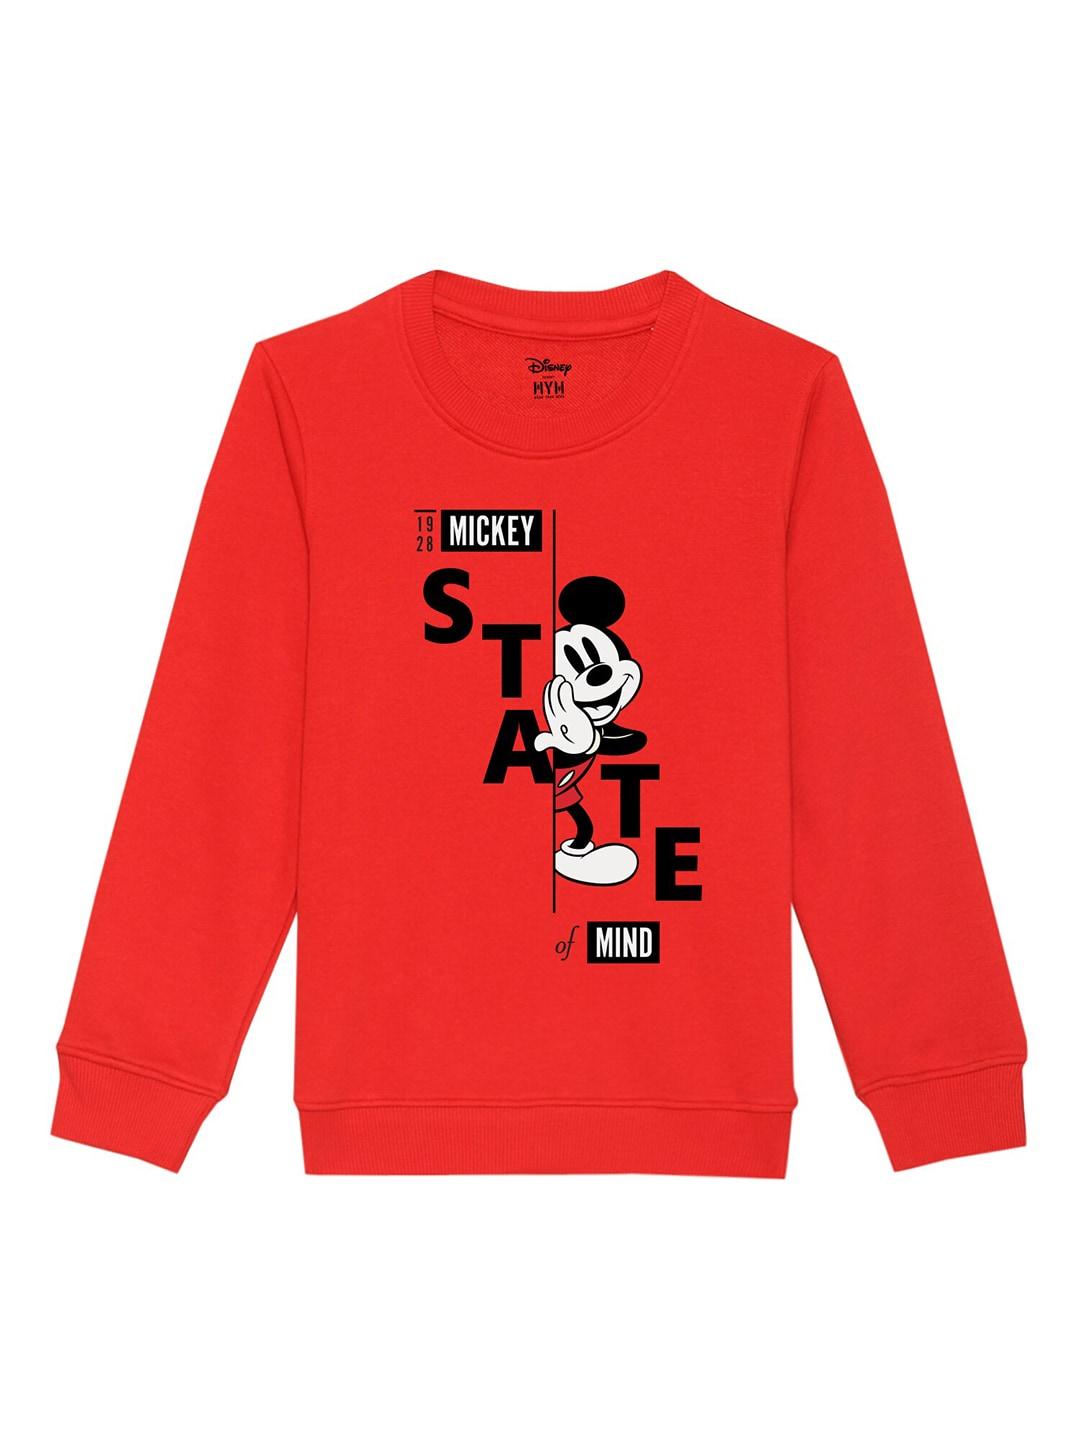 disney-by-wear-your-mind-boys-red-printed-sweatshirt